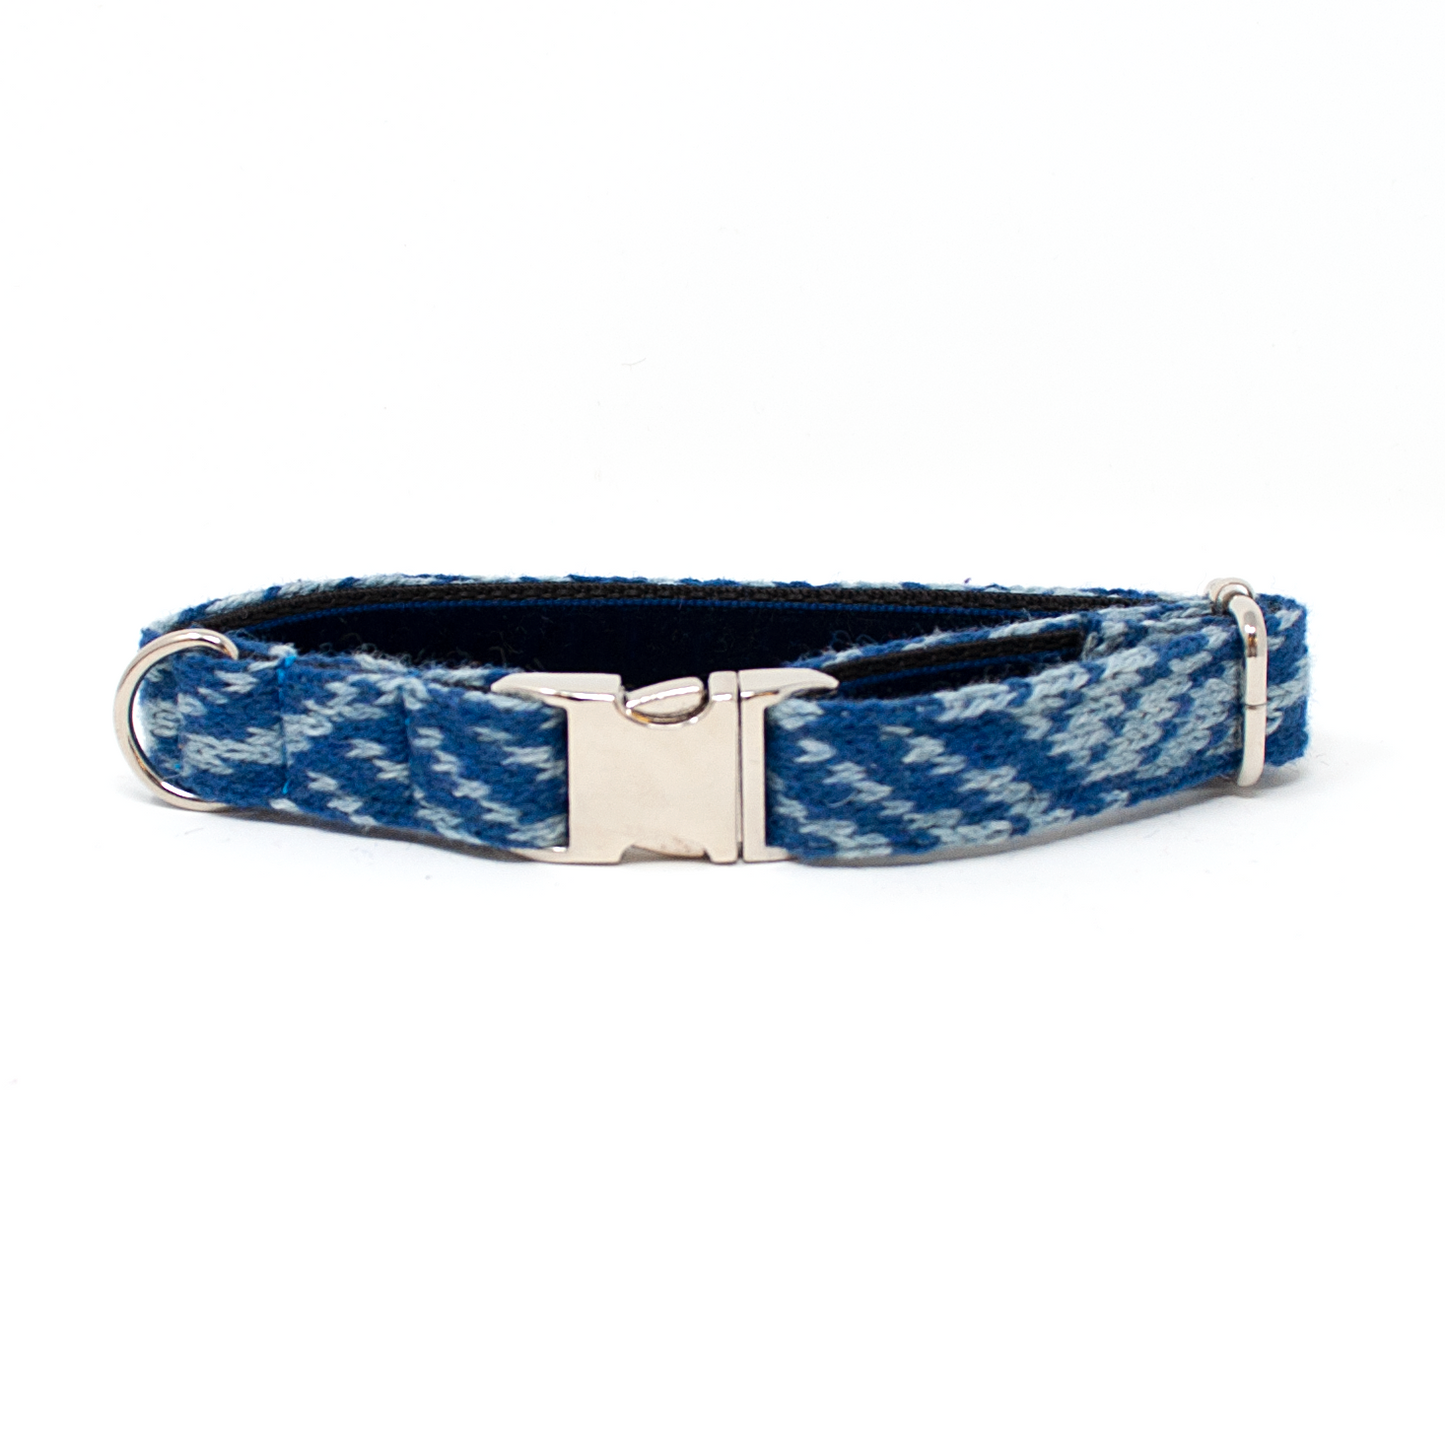 Navy & Ice Blue - Fell Design - Handmade Dog Collar